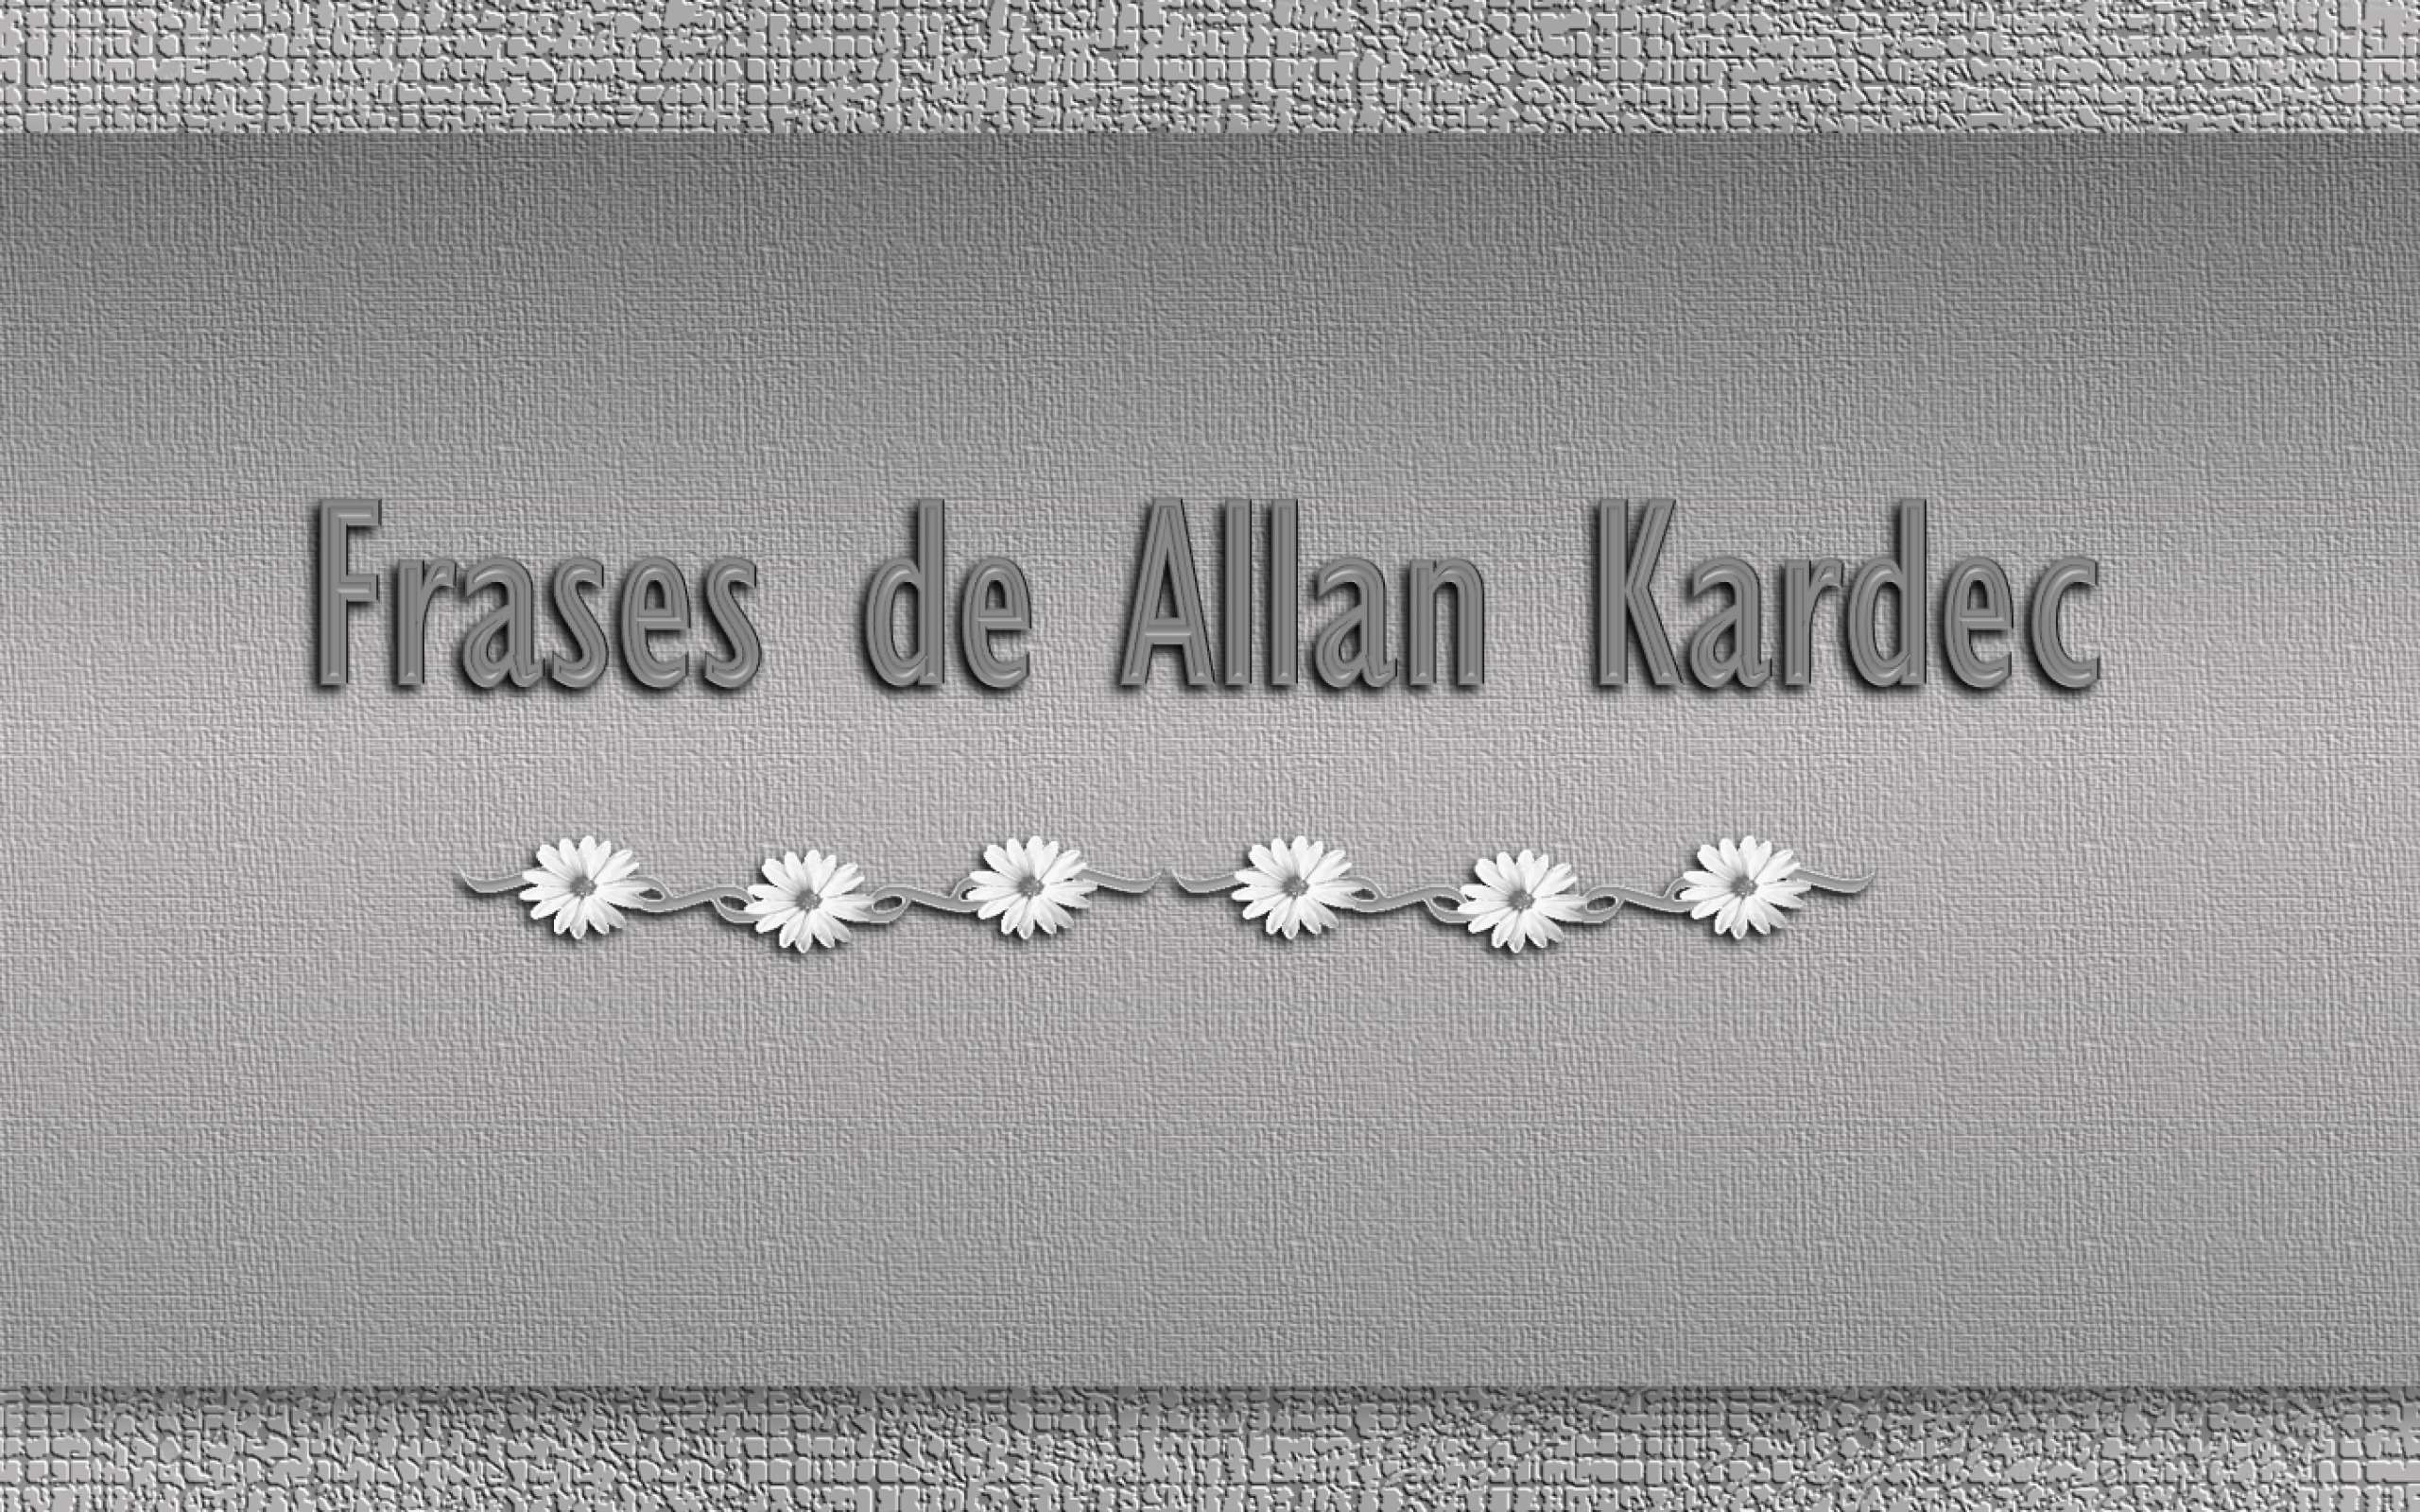 Frases de Allan Kardec I